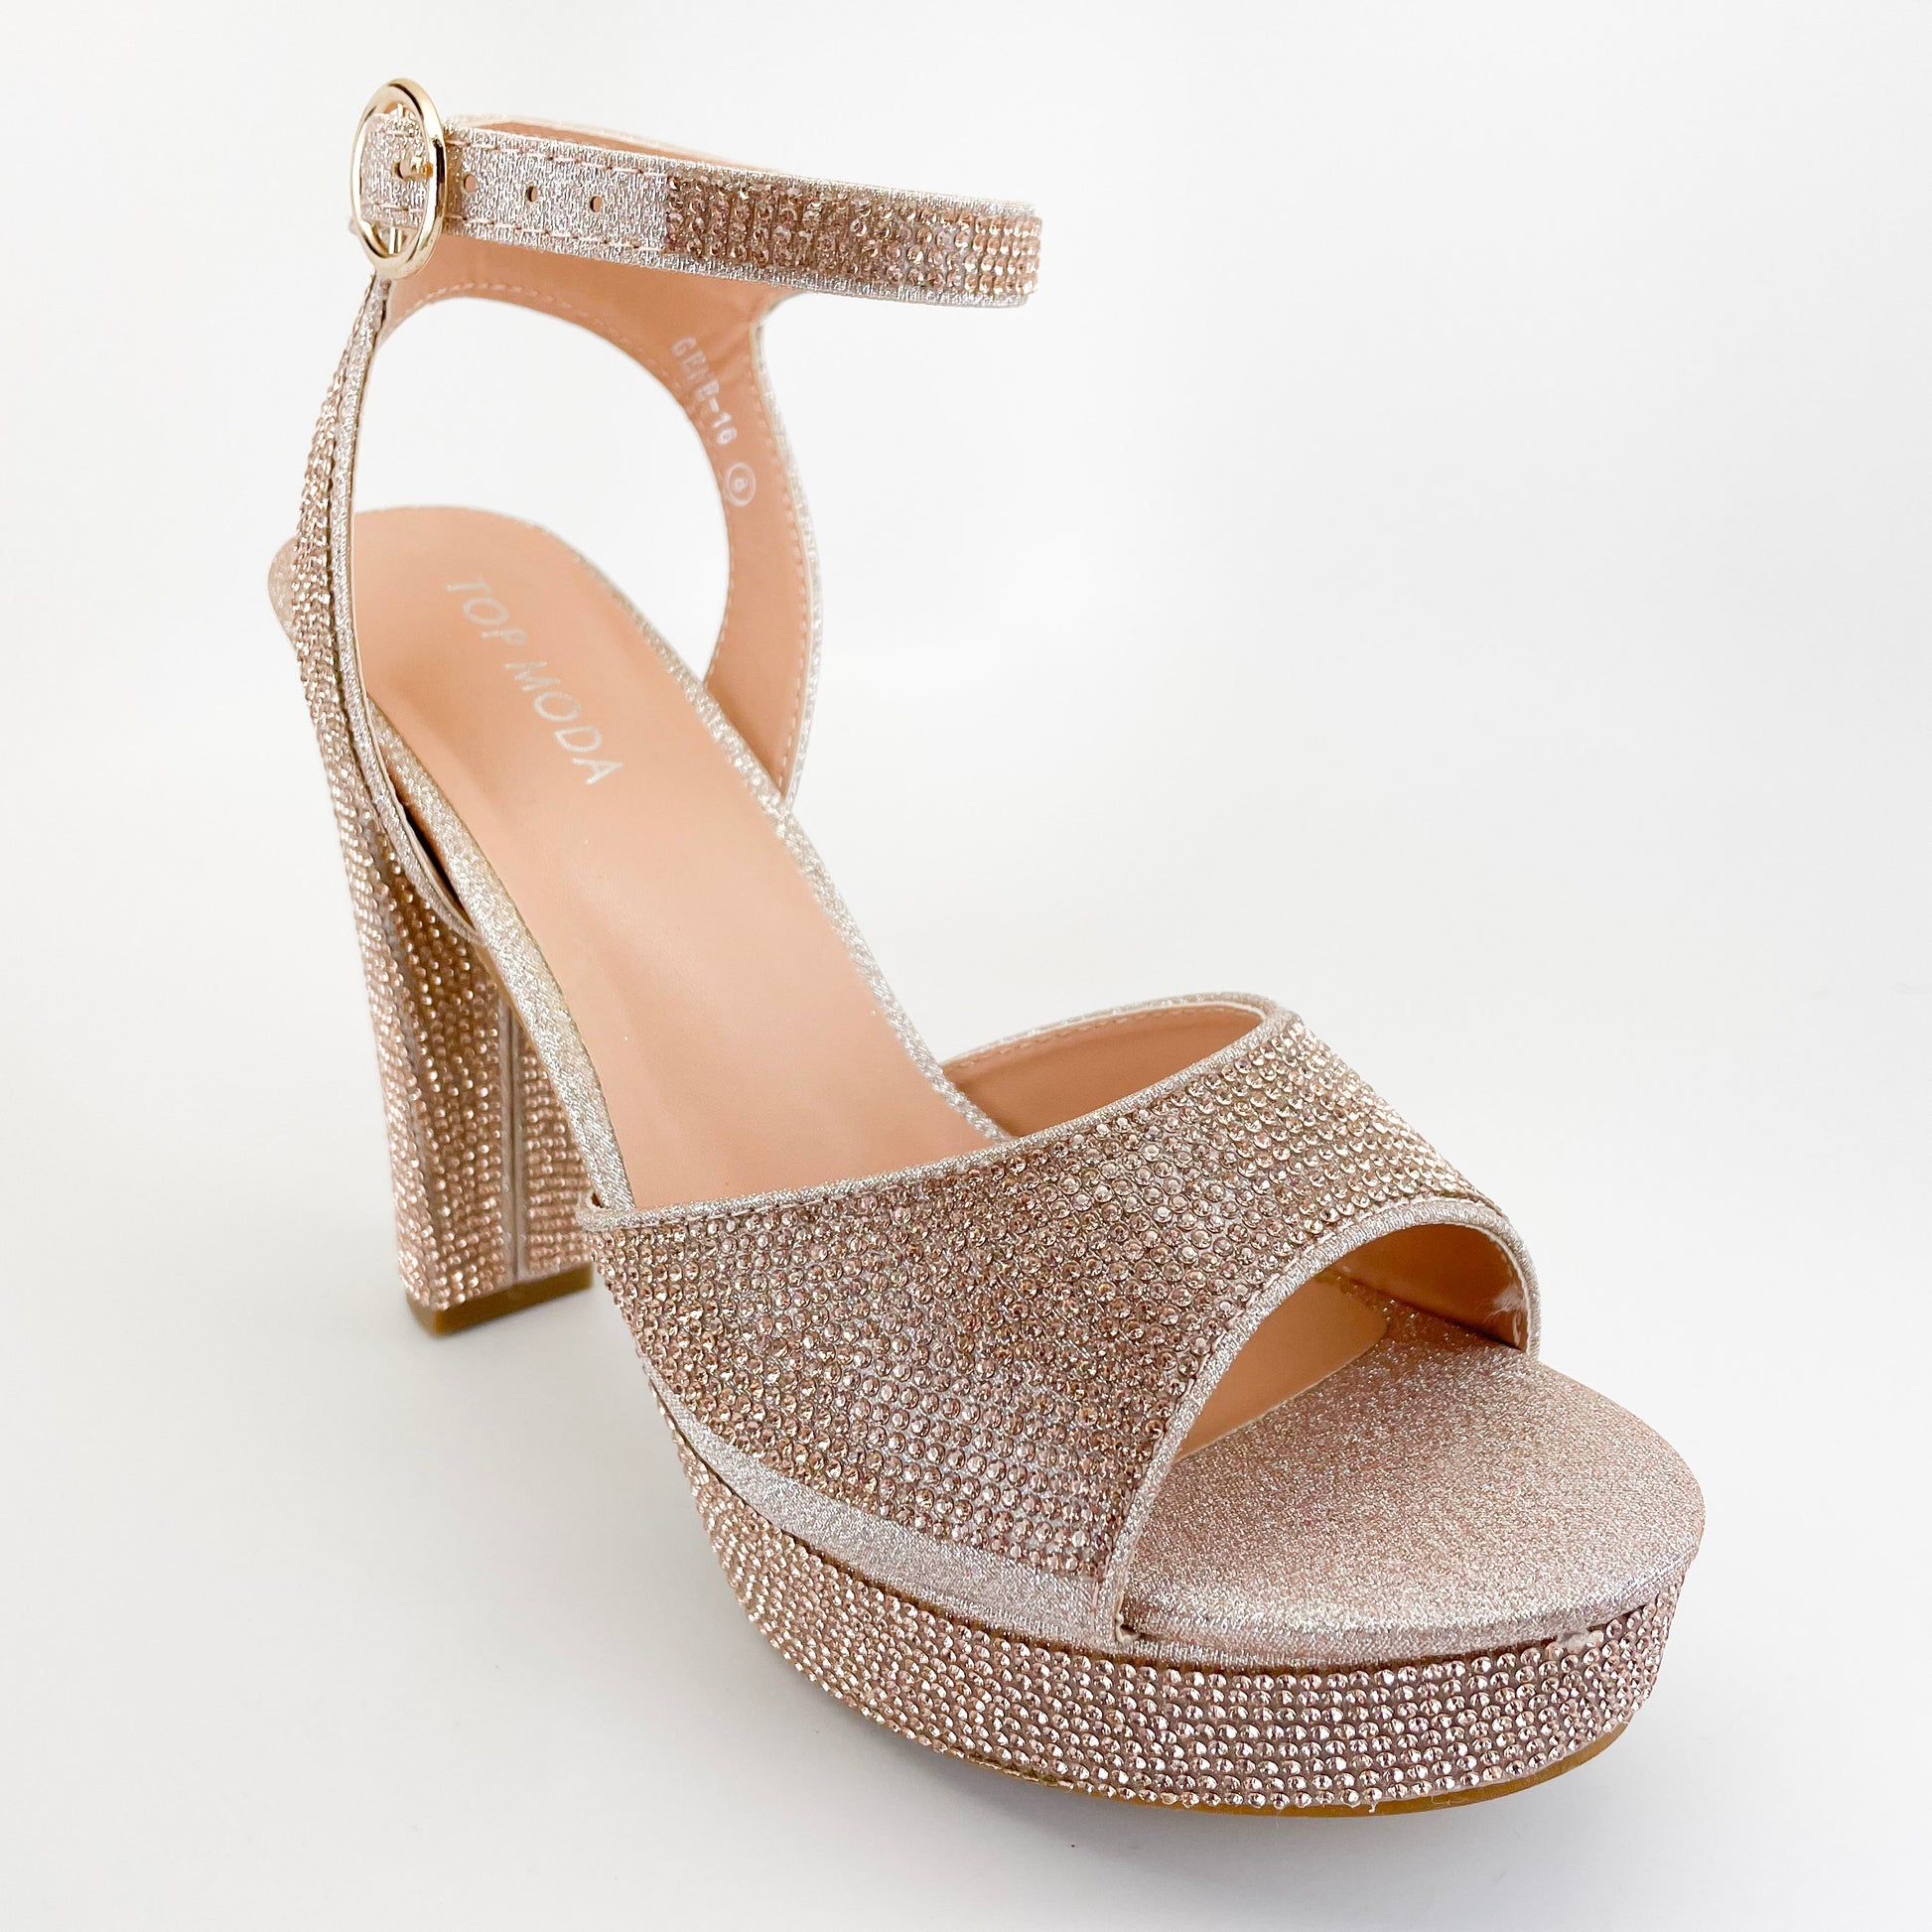 top moda gene-16 rosegold platform heels with rhinestones shoedazzle wedding party